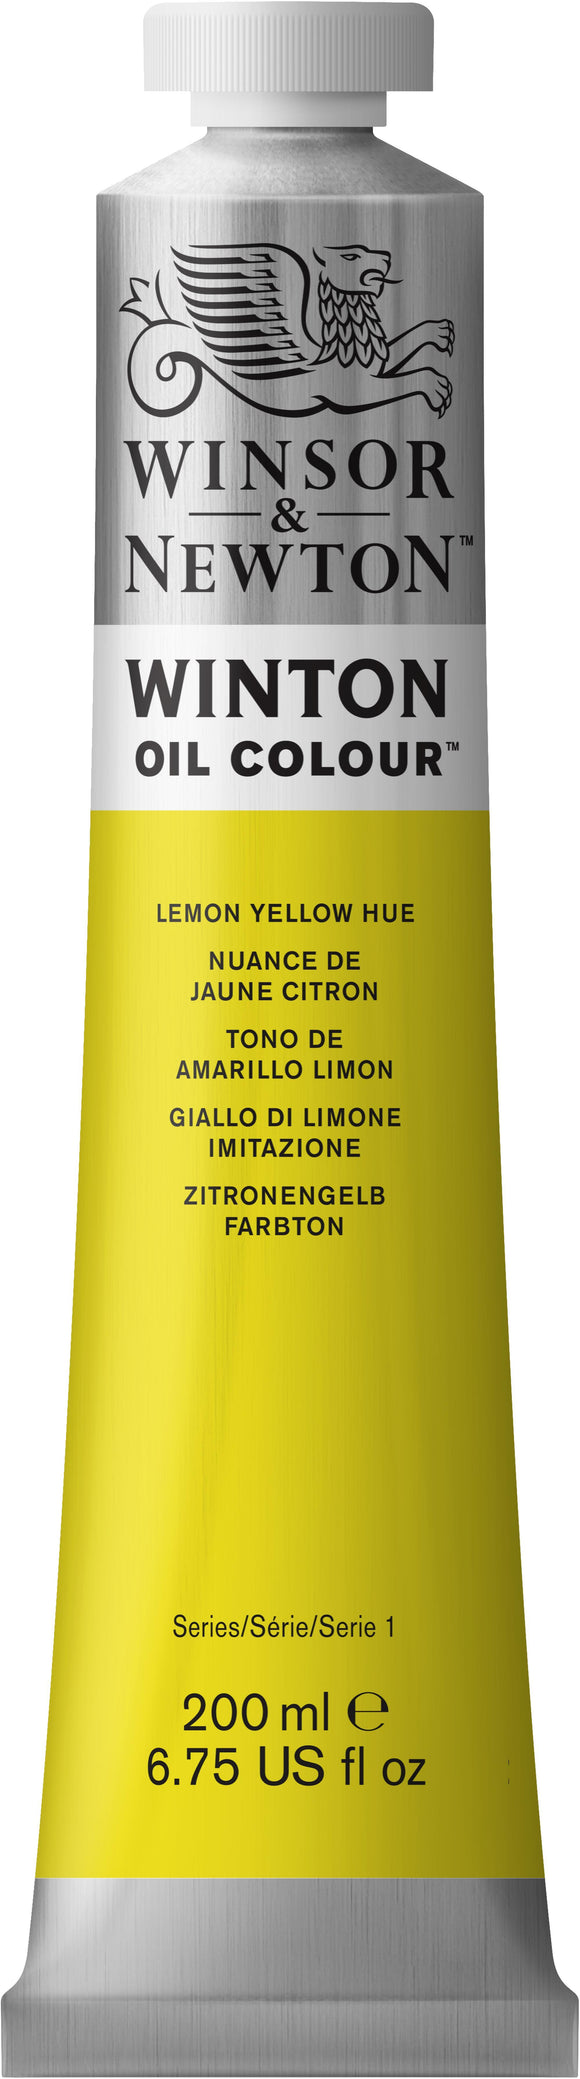 Winsor & Newton Winton Oil Colour Lemon Yellow Hue 200Ml